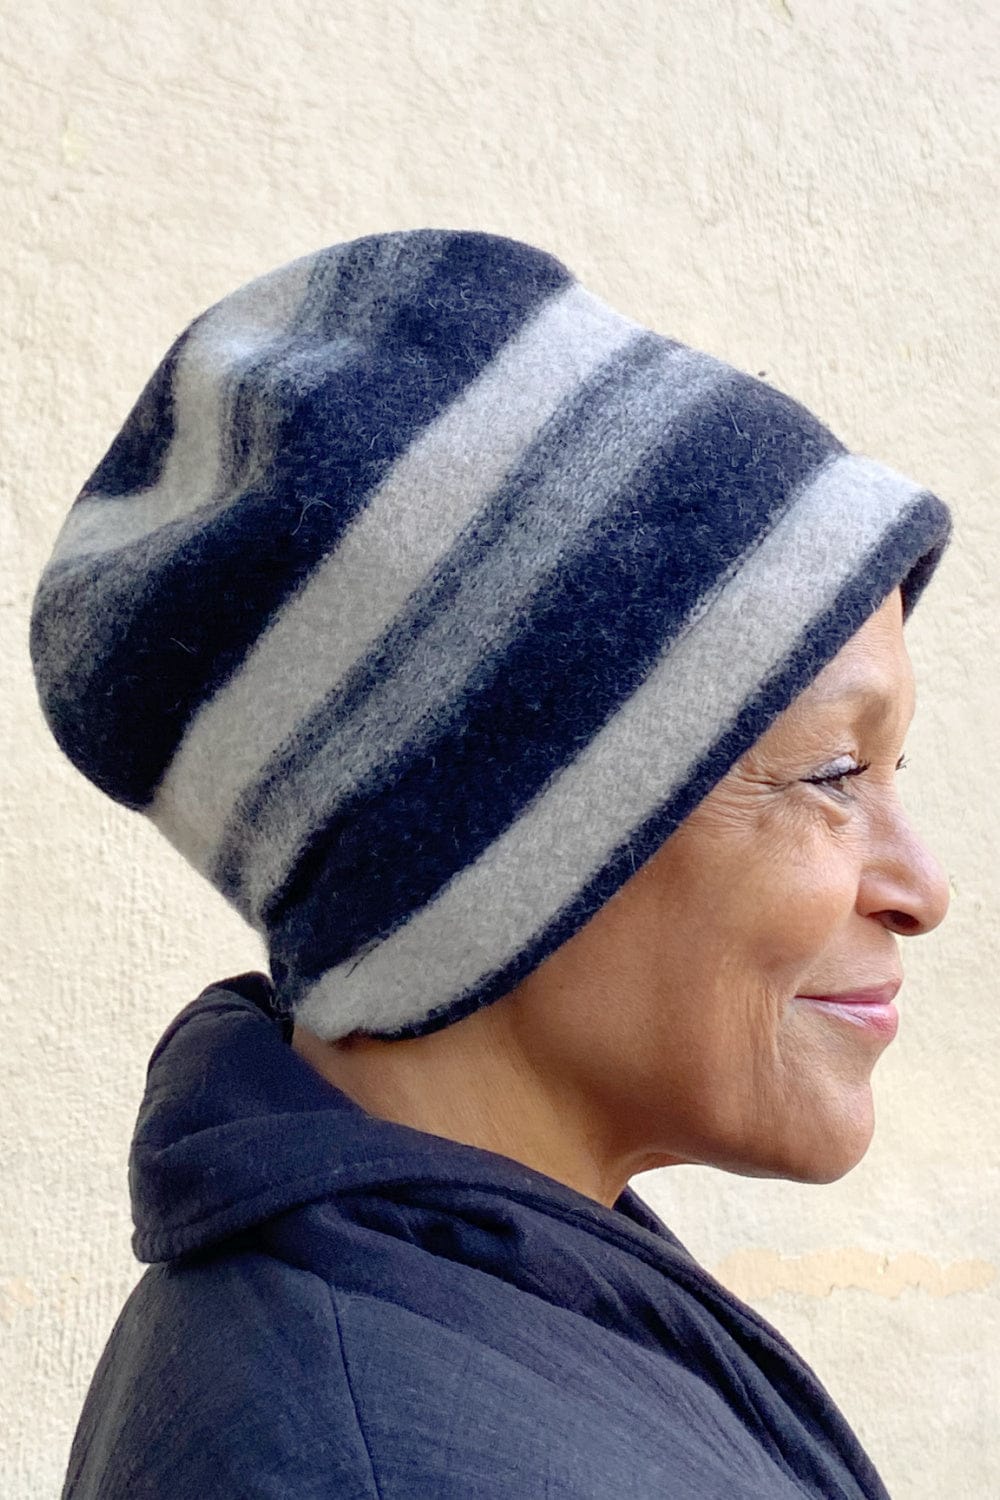 Black and greyish striped merino wool woman's hat.